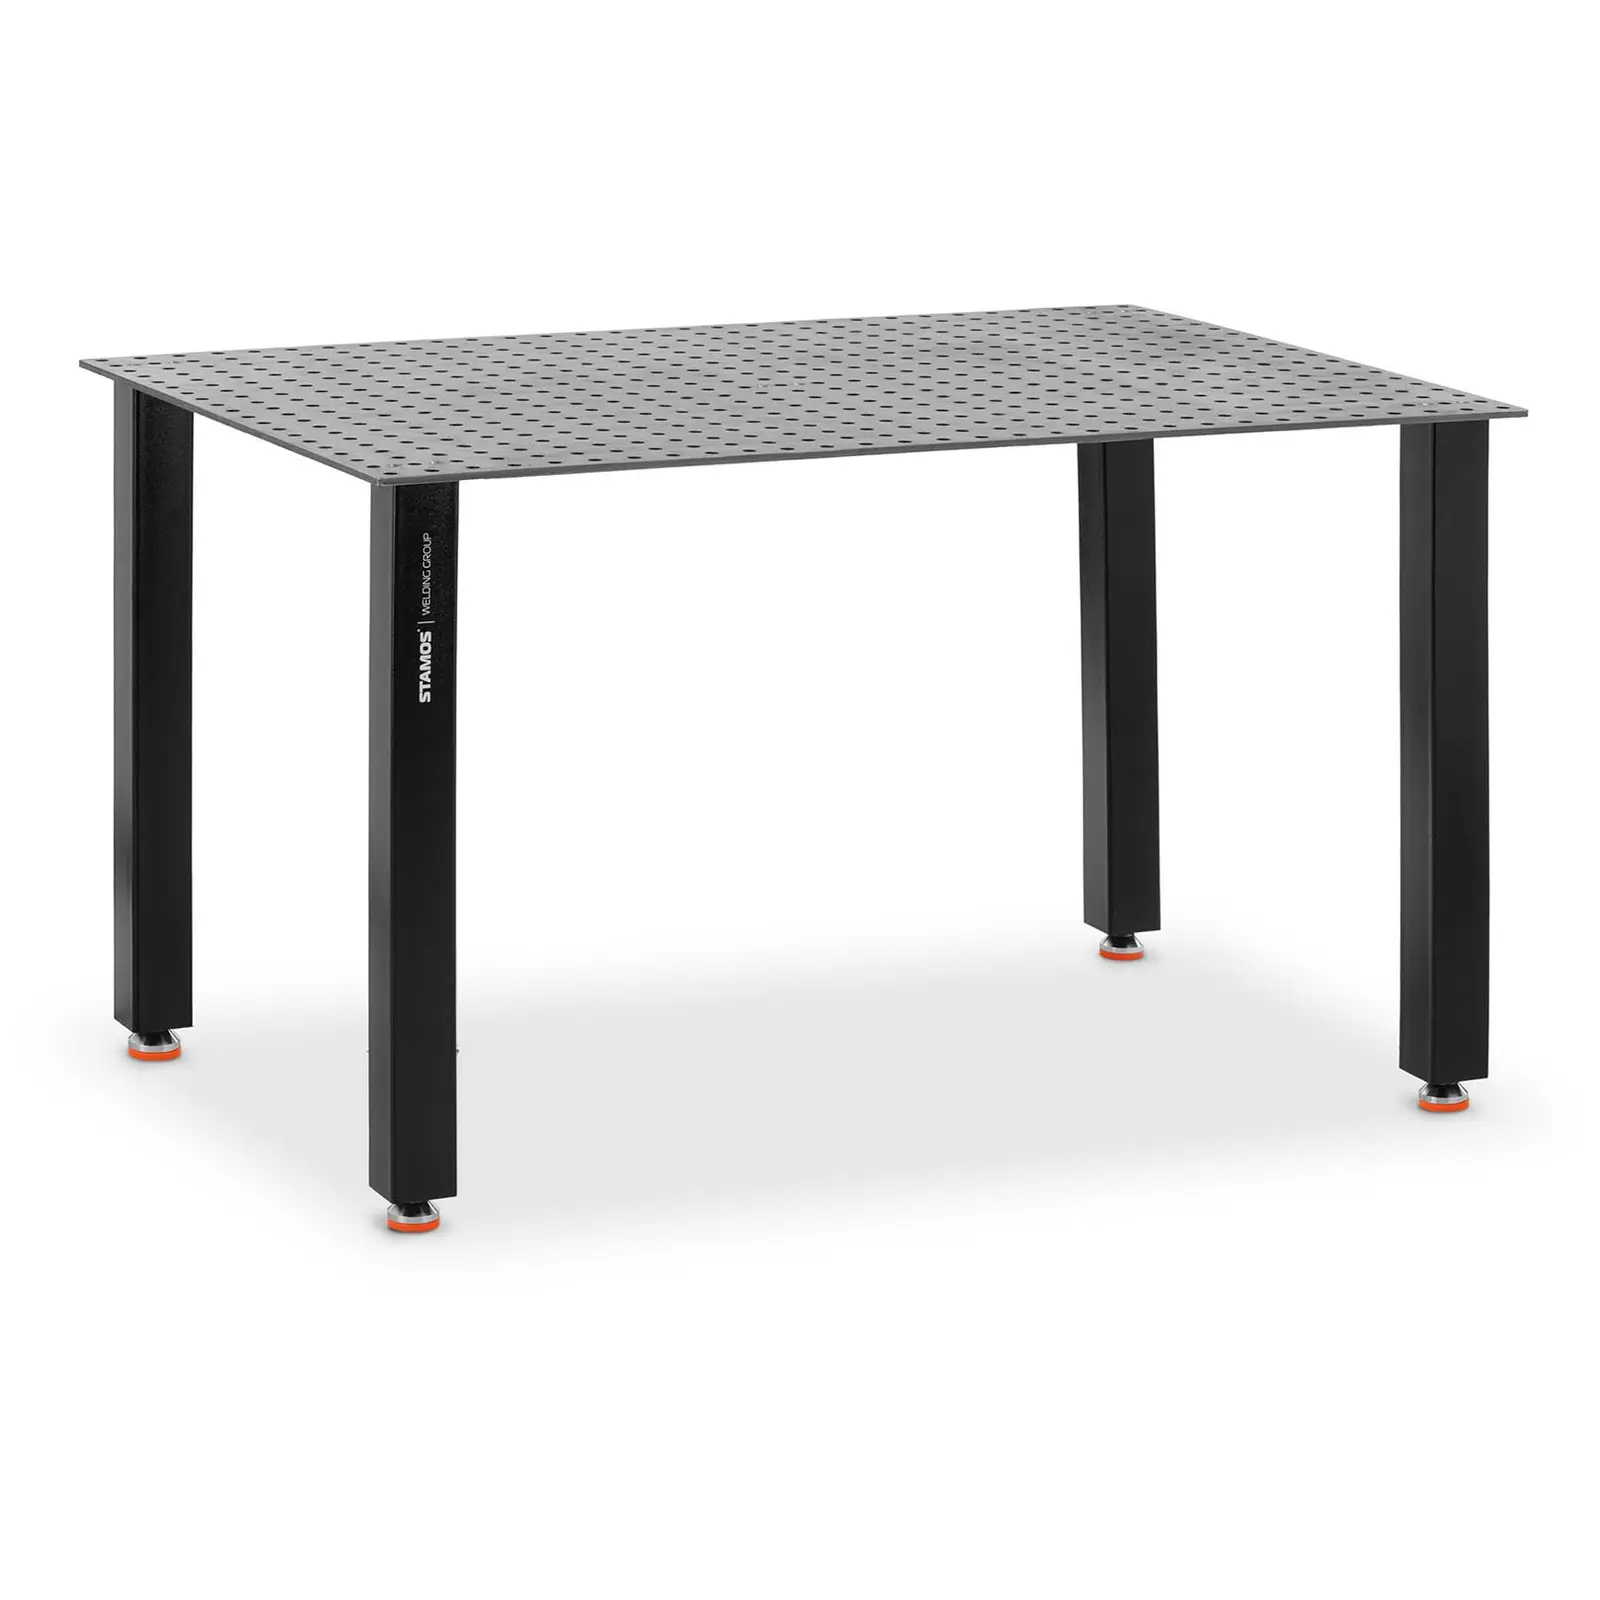 Welding Table - 200 kg - 150 x 100 cm